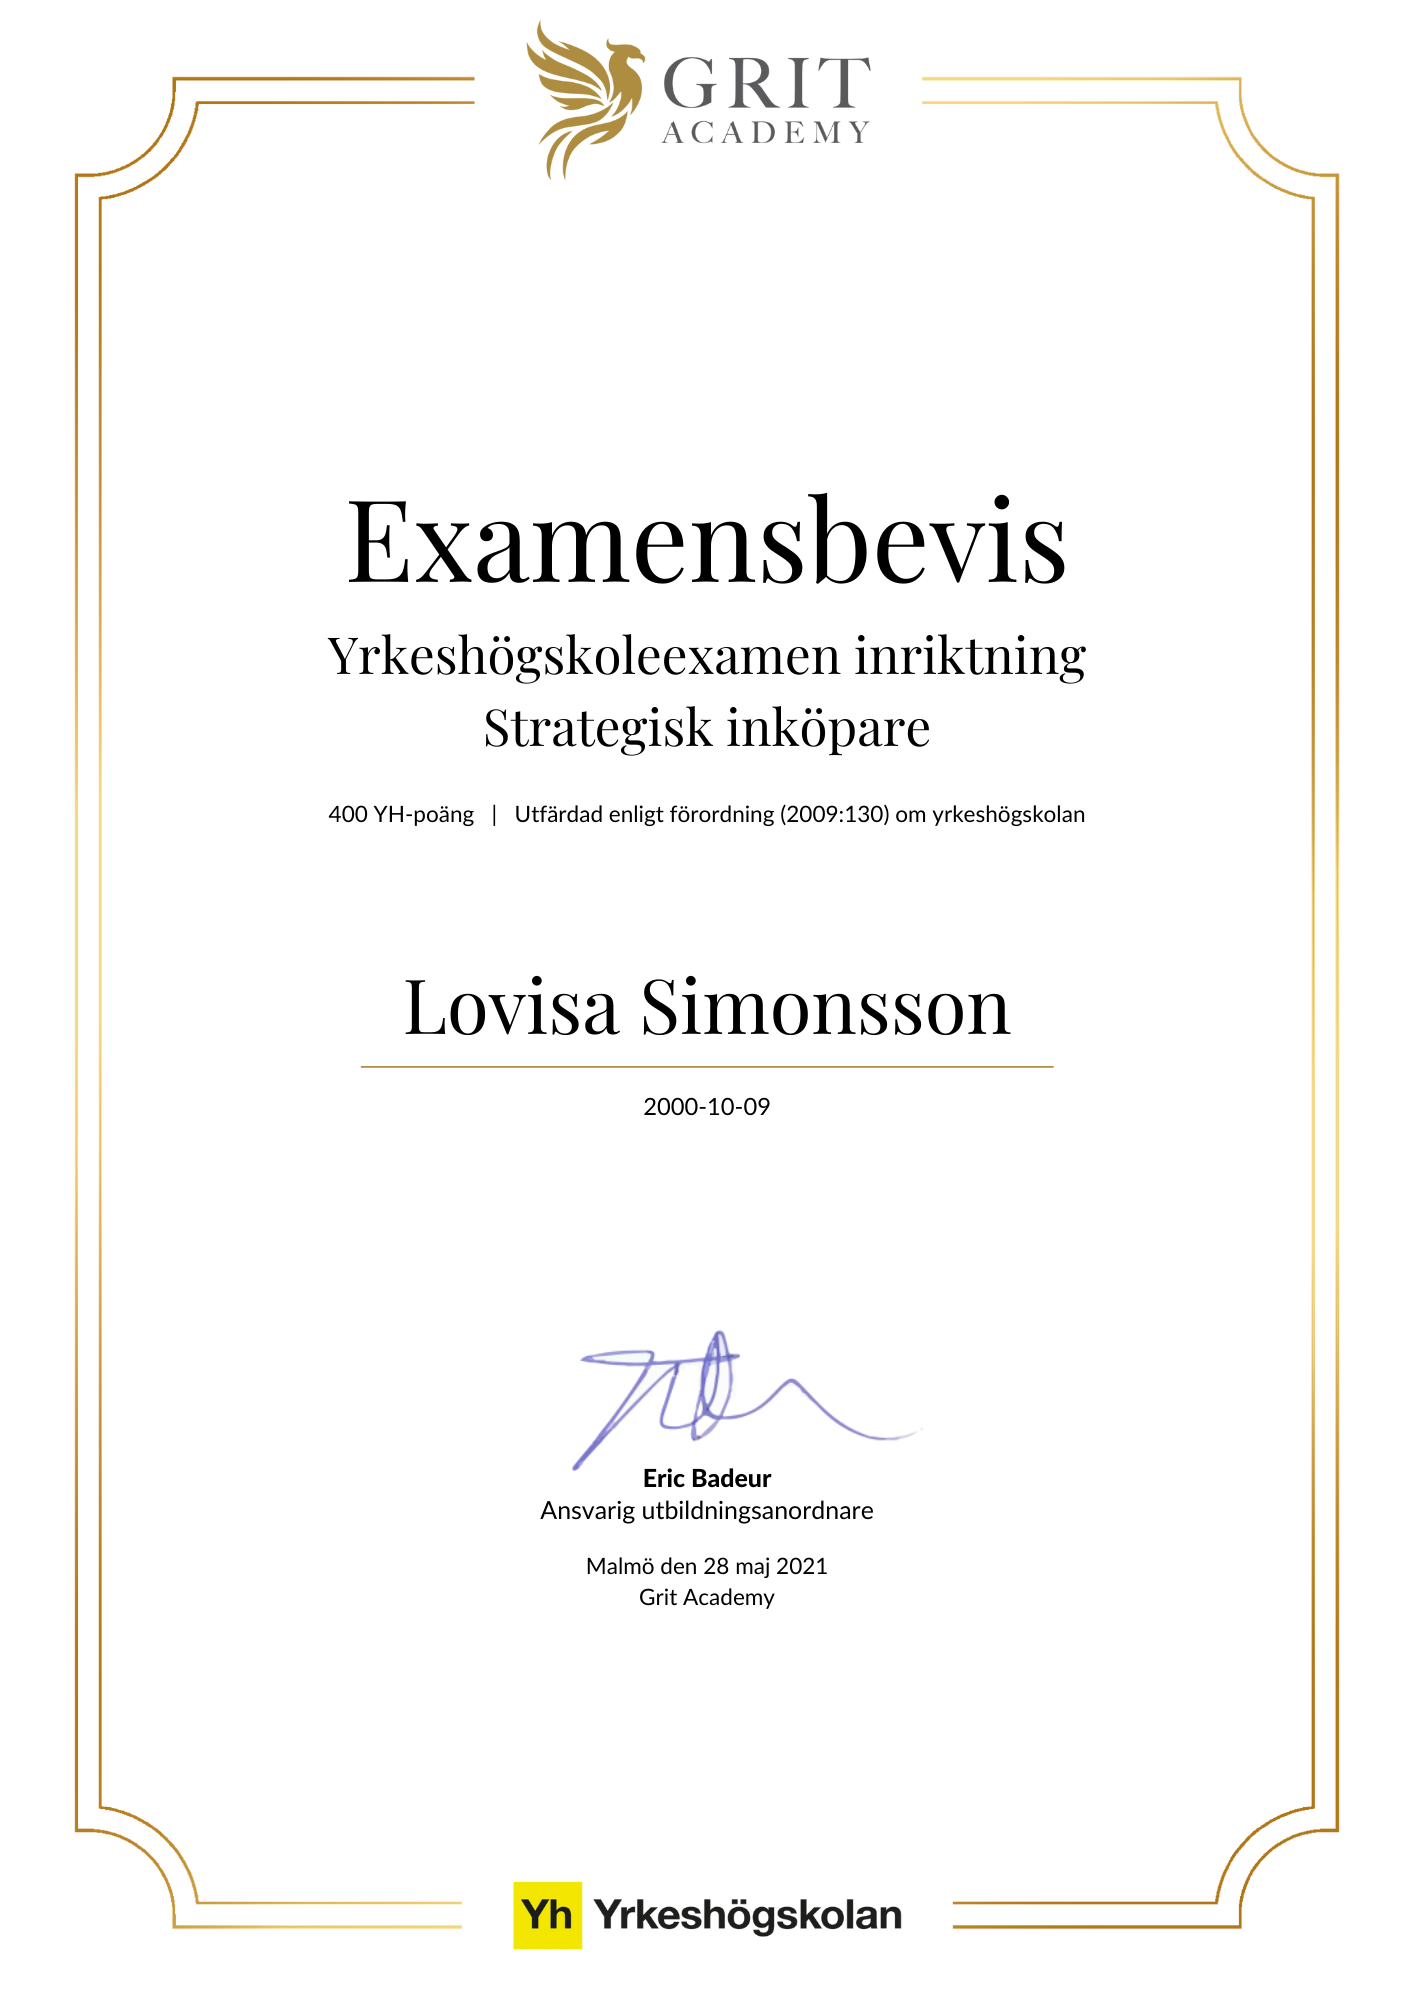 Examensbevis Lovisa Simonsson - 1